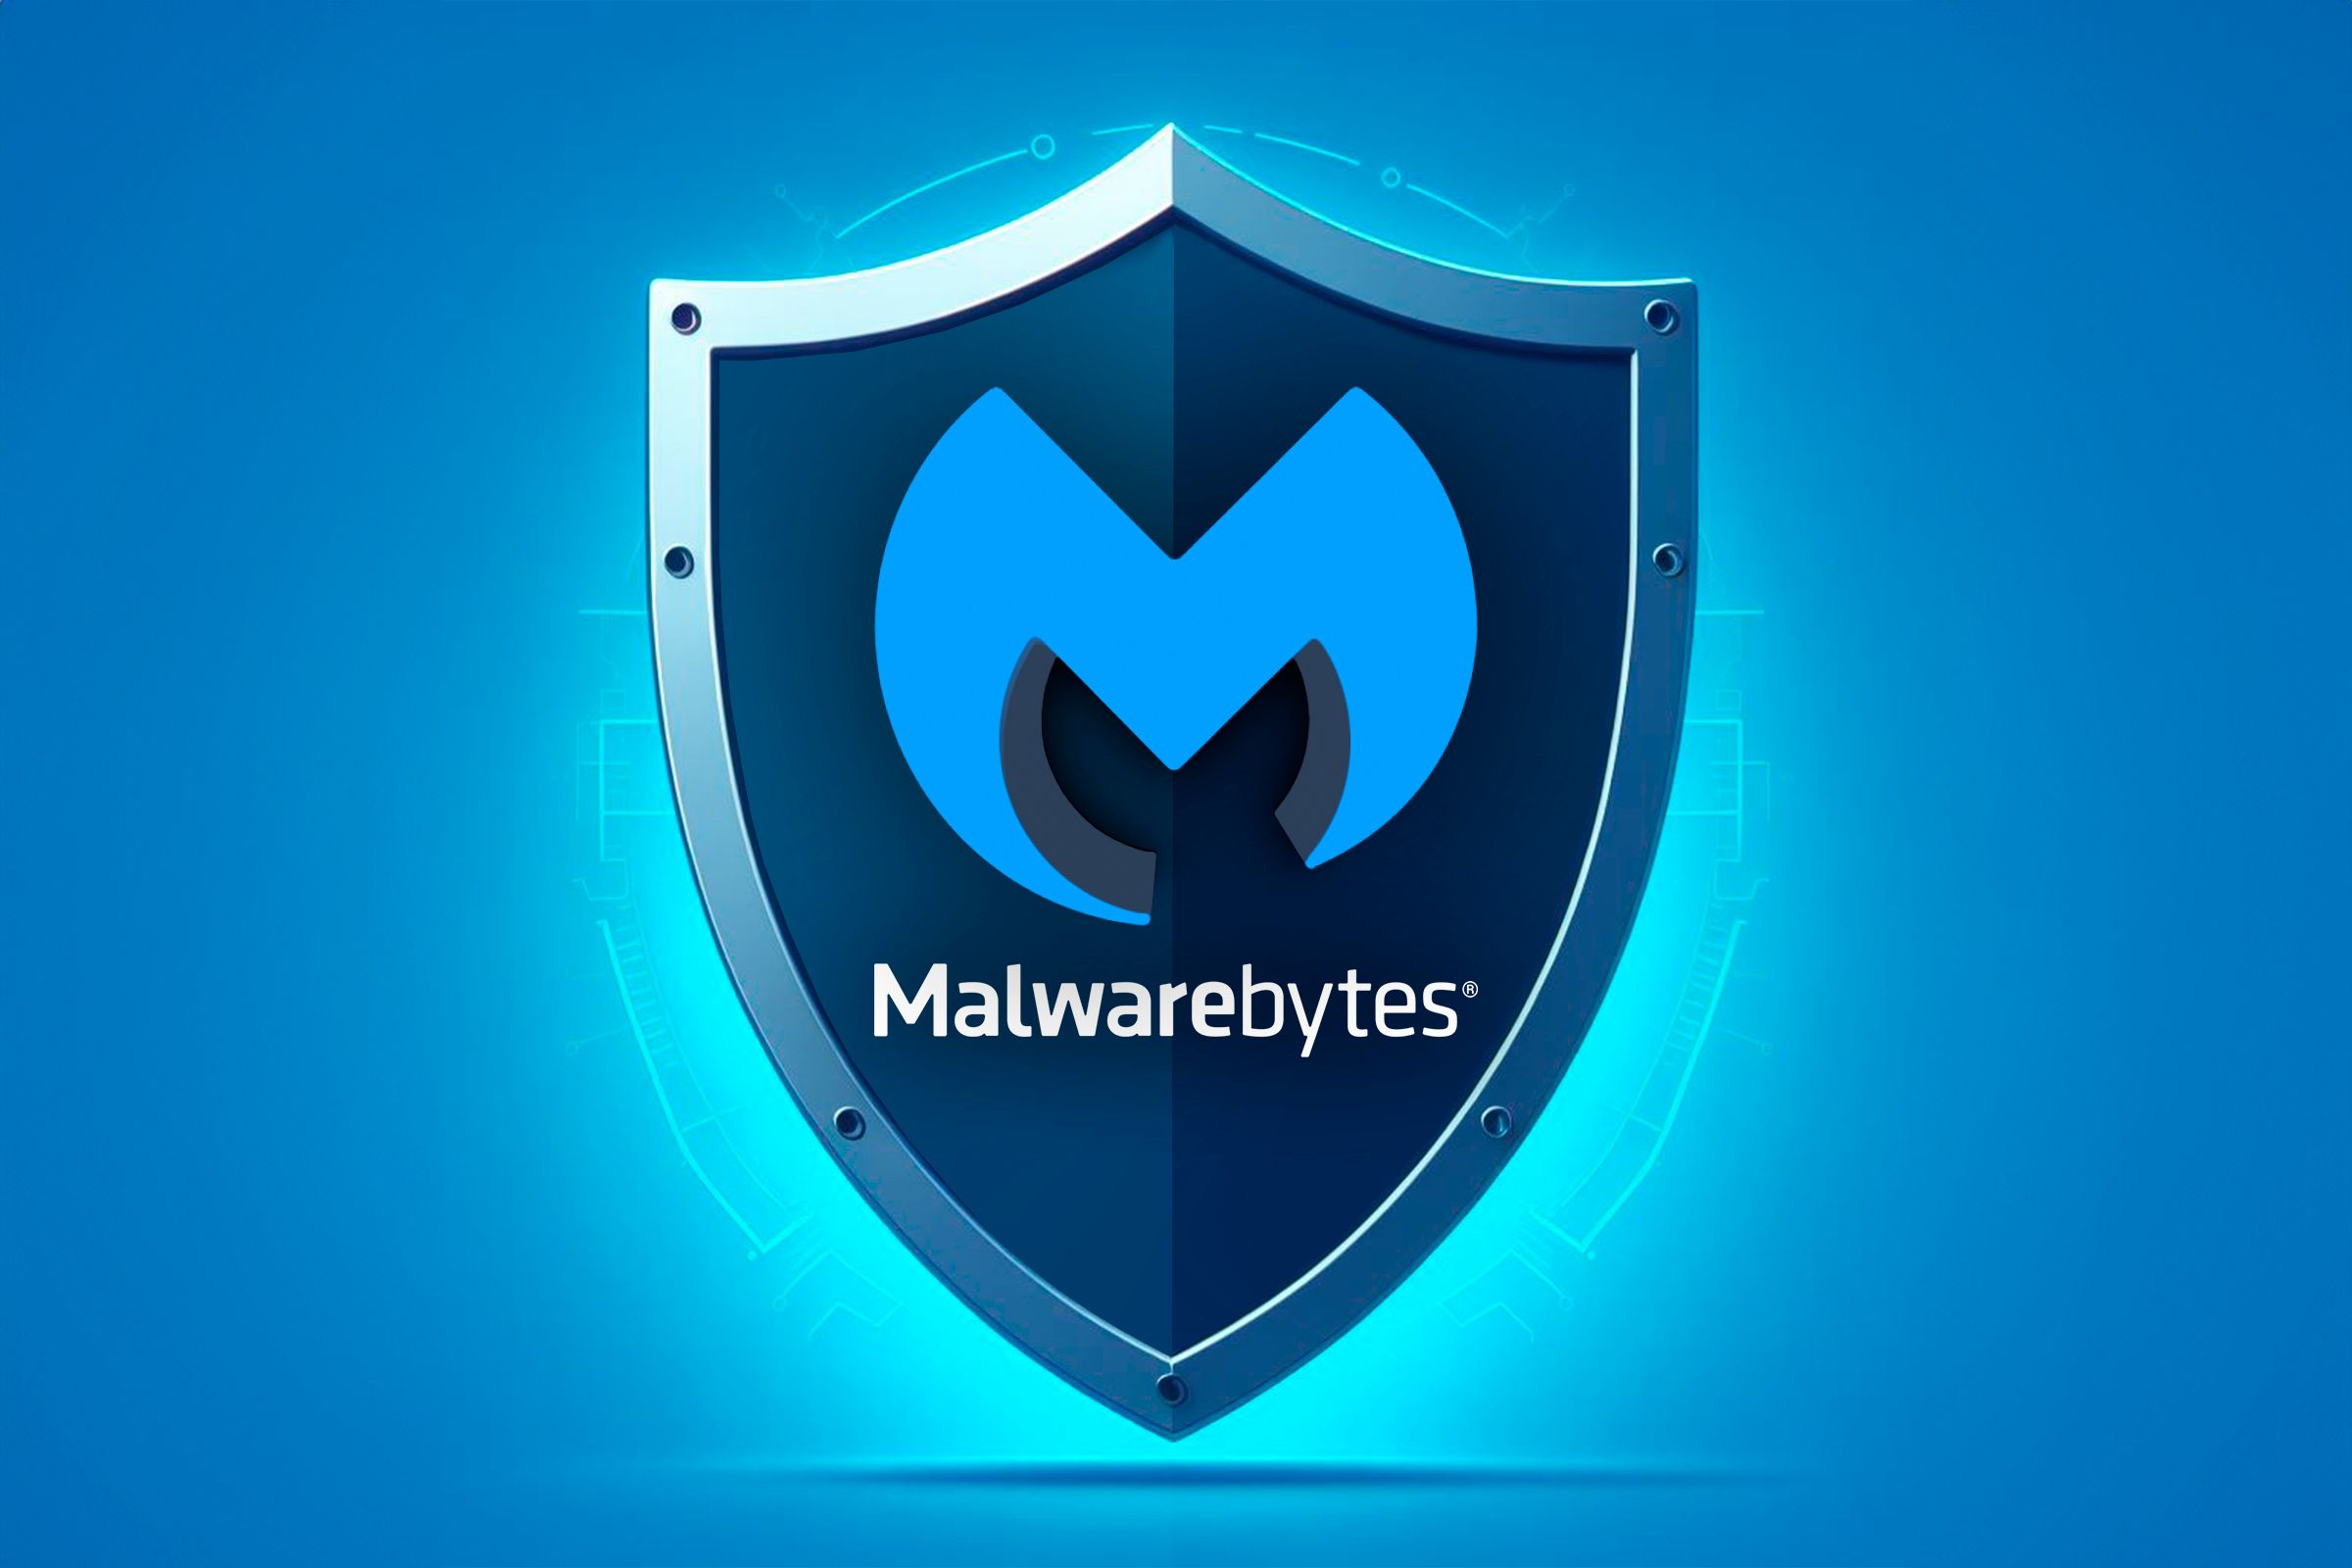 A shield with malwarebytes logo